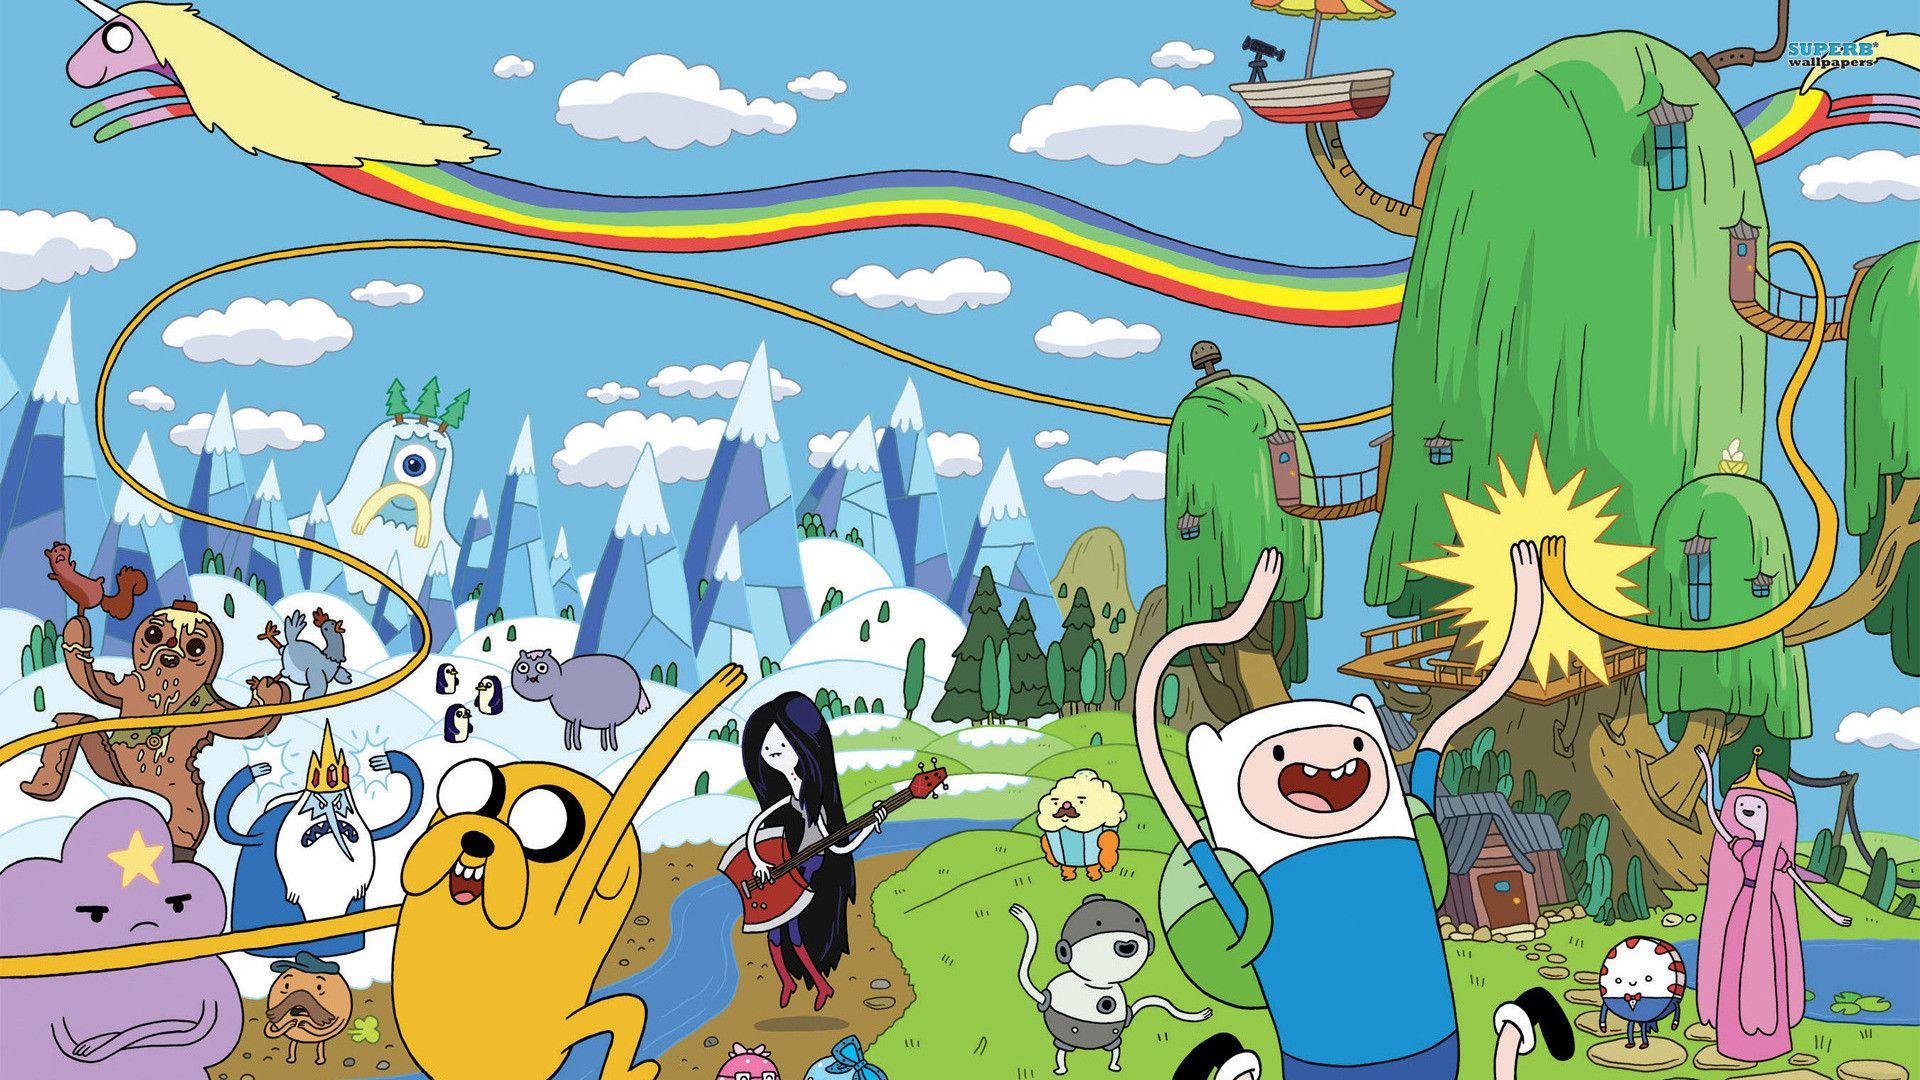 Adventure Time Wallpaper for Desktop